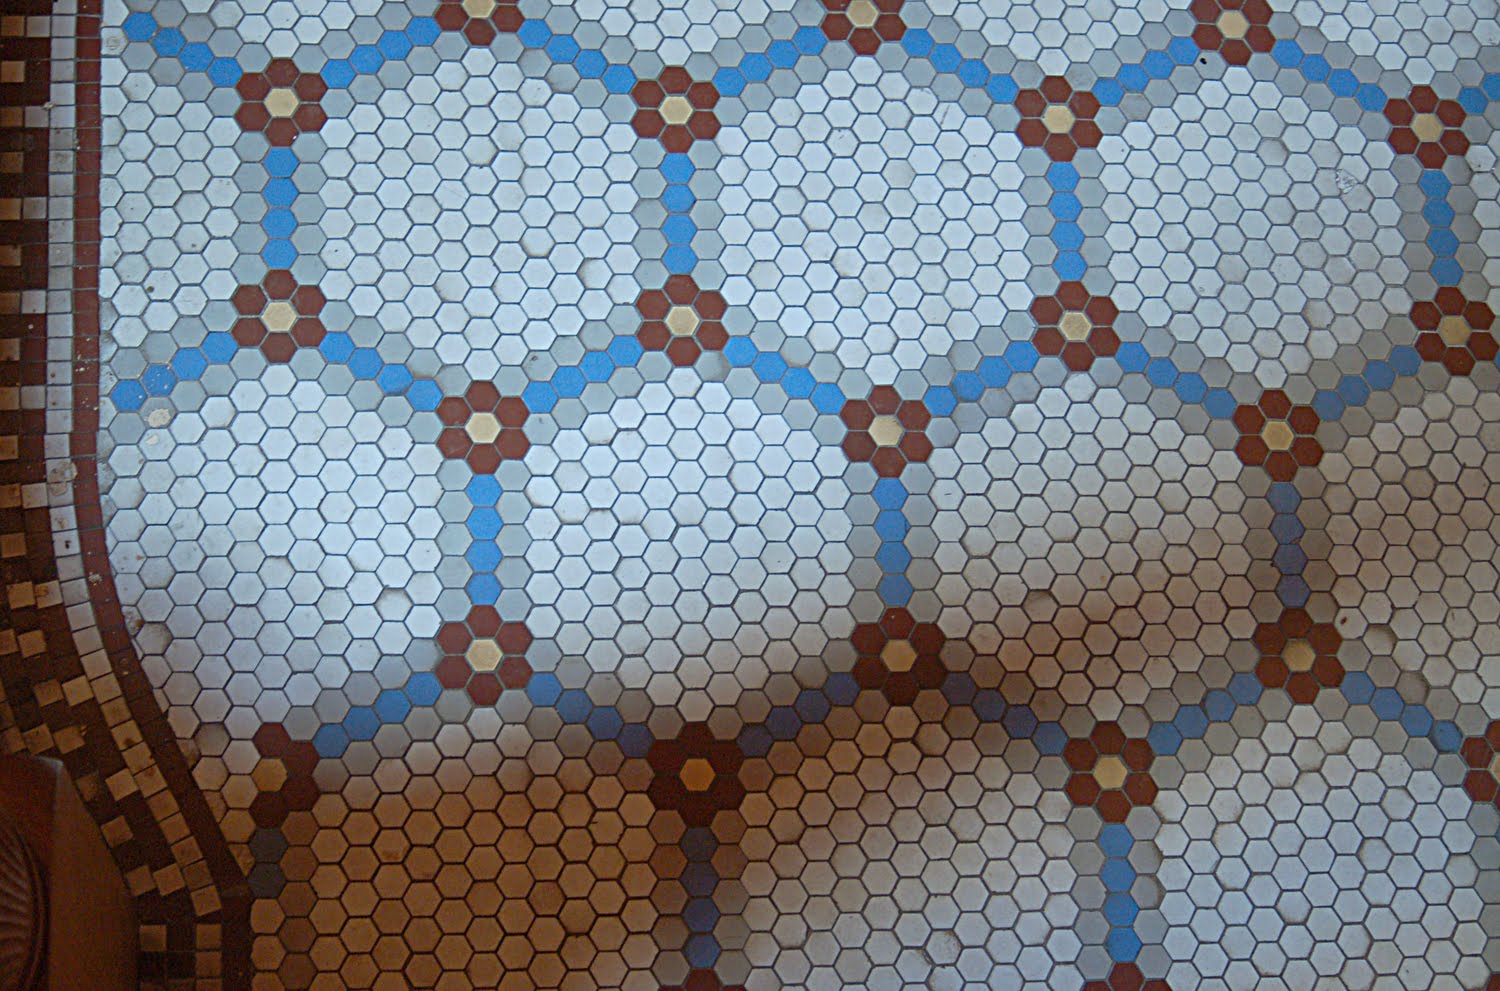 elegant-flooring-design-ideas-for-kitchen-and-bathroom-areas-with-blue-hexagon-floor-tile-pattern-cool-flooring-design-ideas-using-hexagon